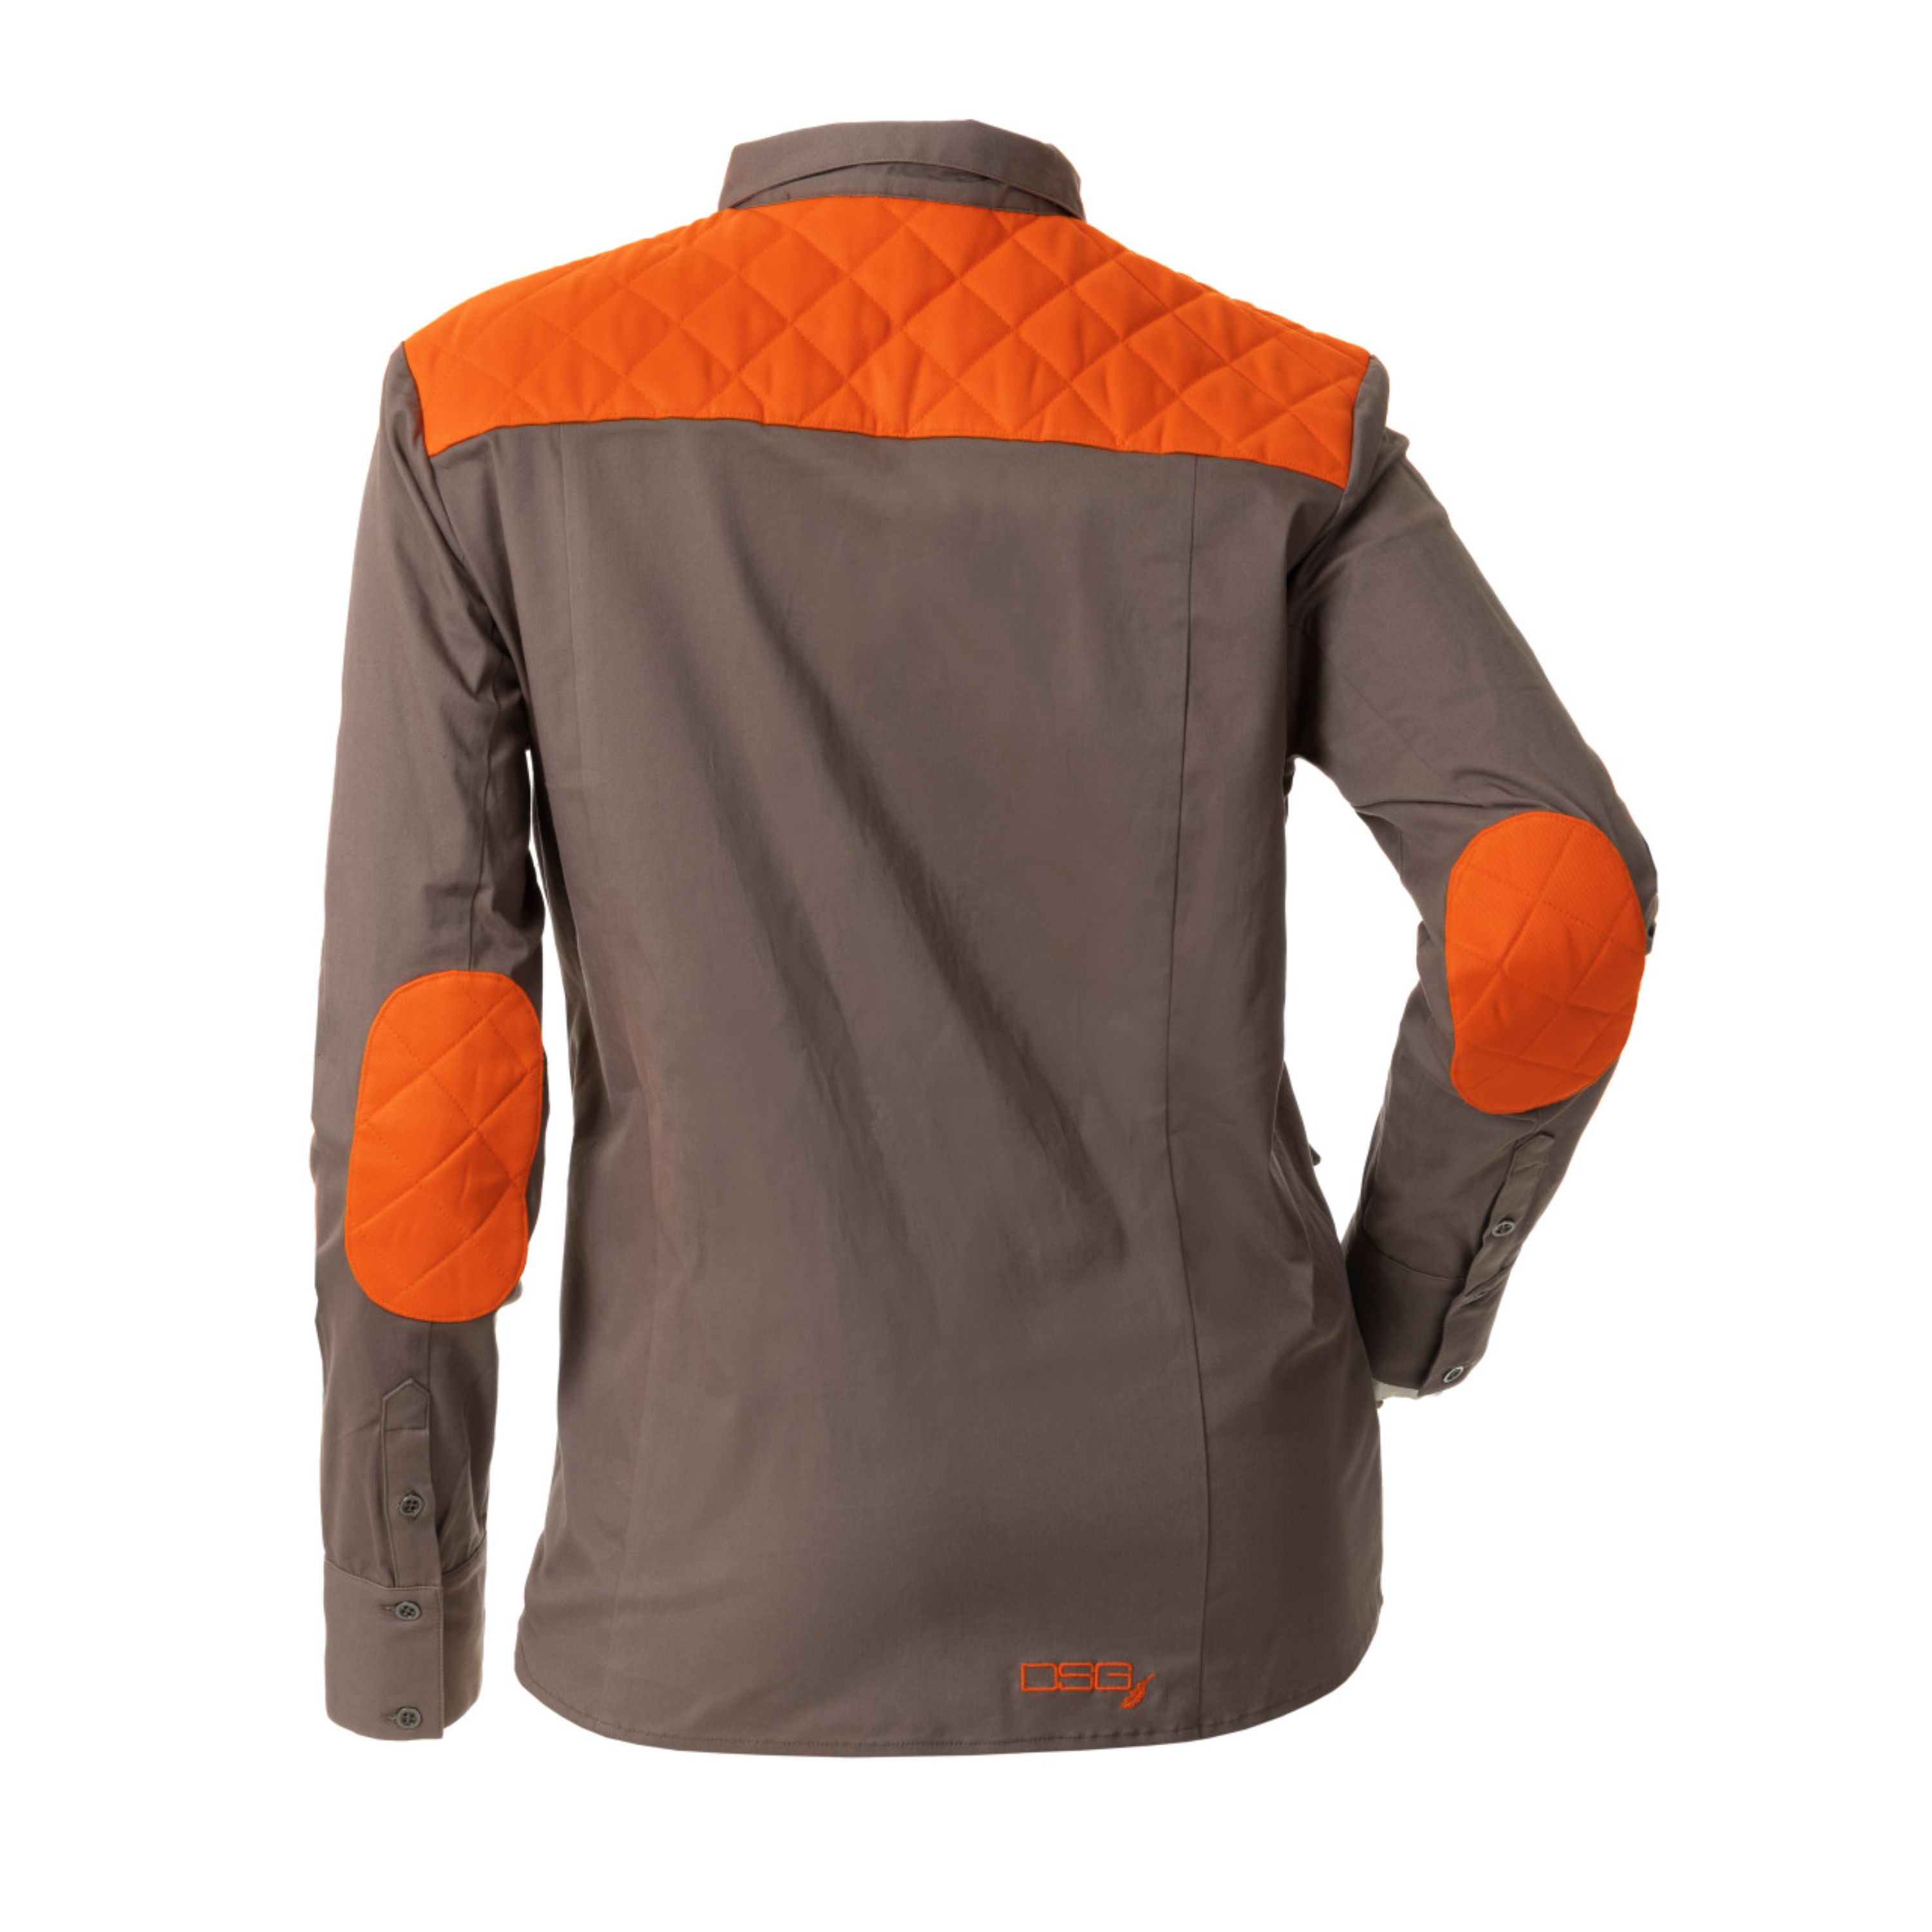 DSG Outerwear Ultra Lightweight Hunting Shirt - UPF 50+, Charcoal